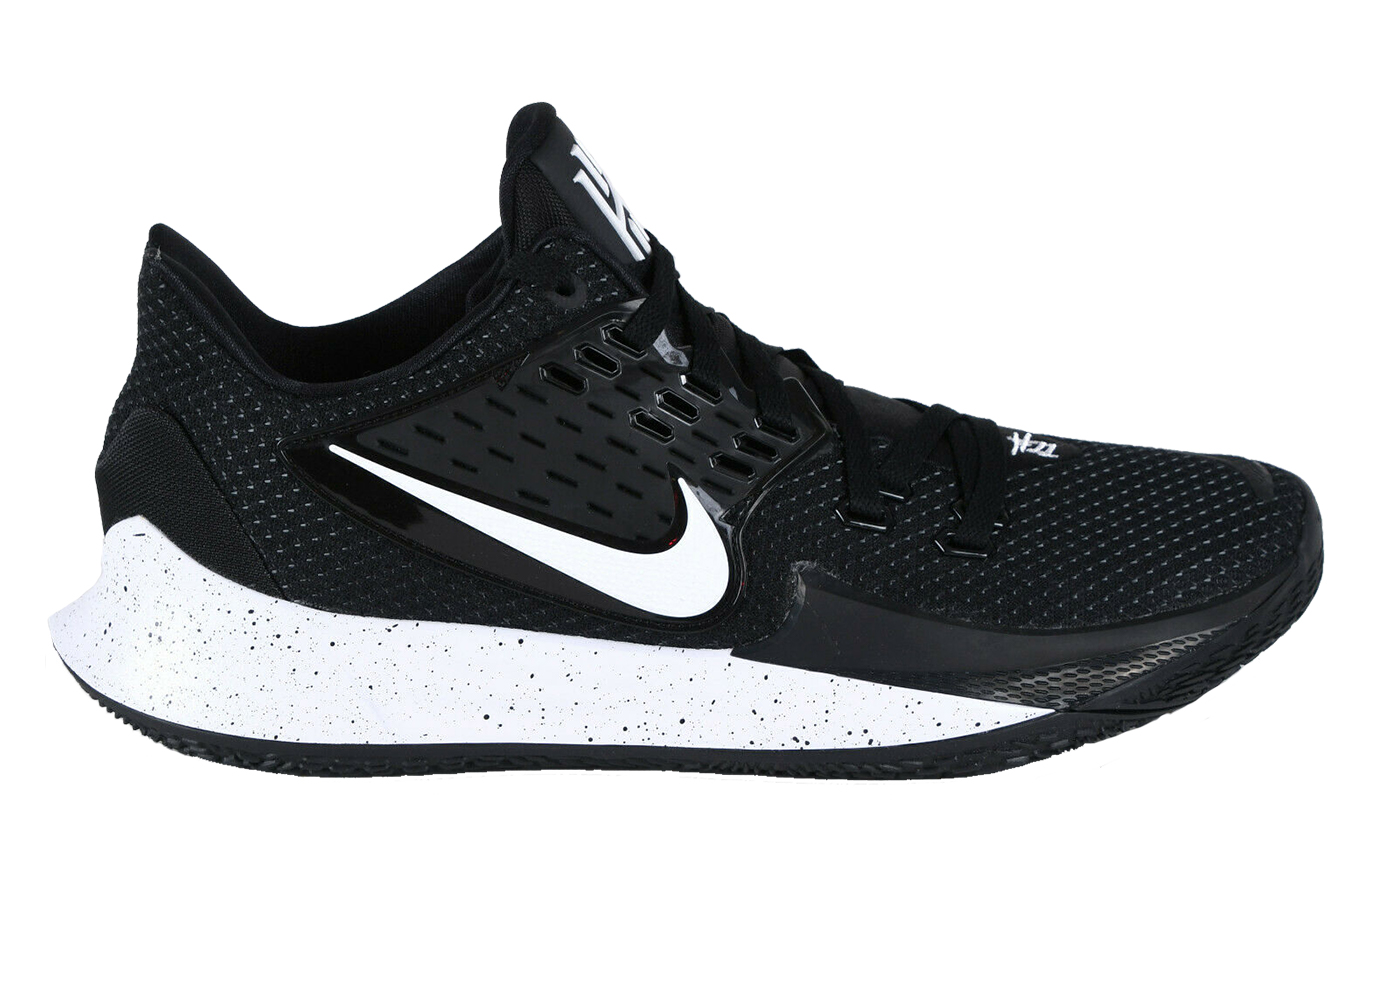 Nike Kyrie 2 Low TB Promo Black White